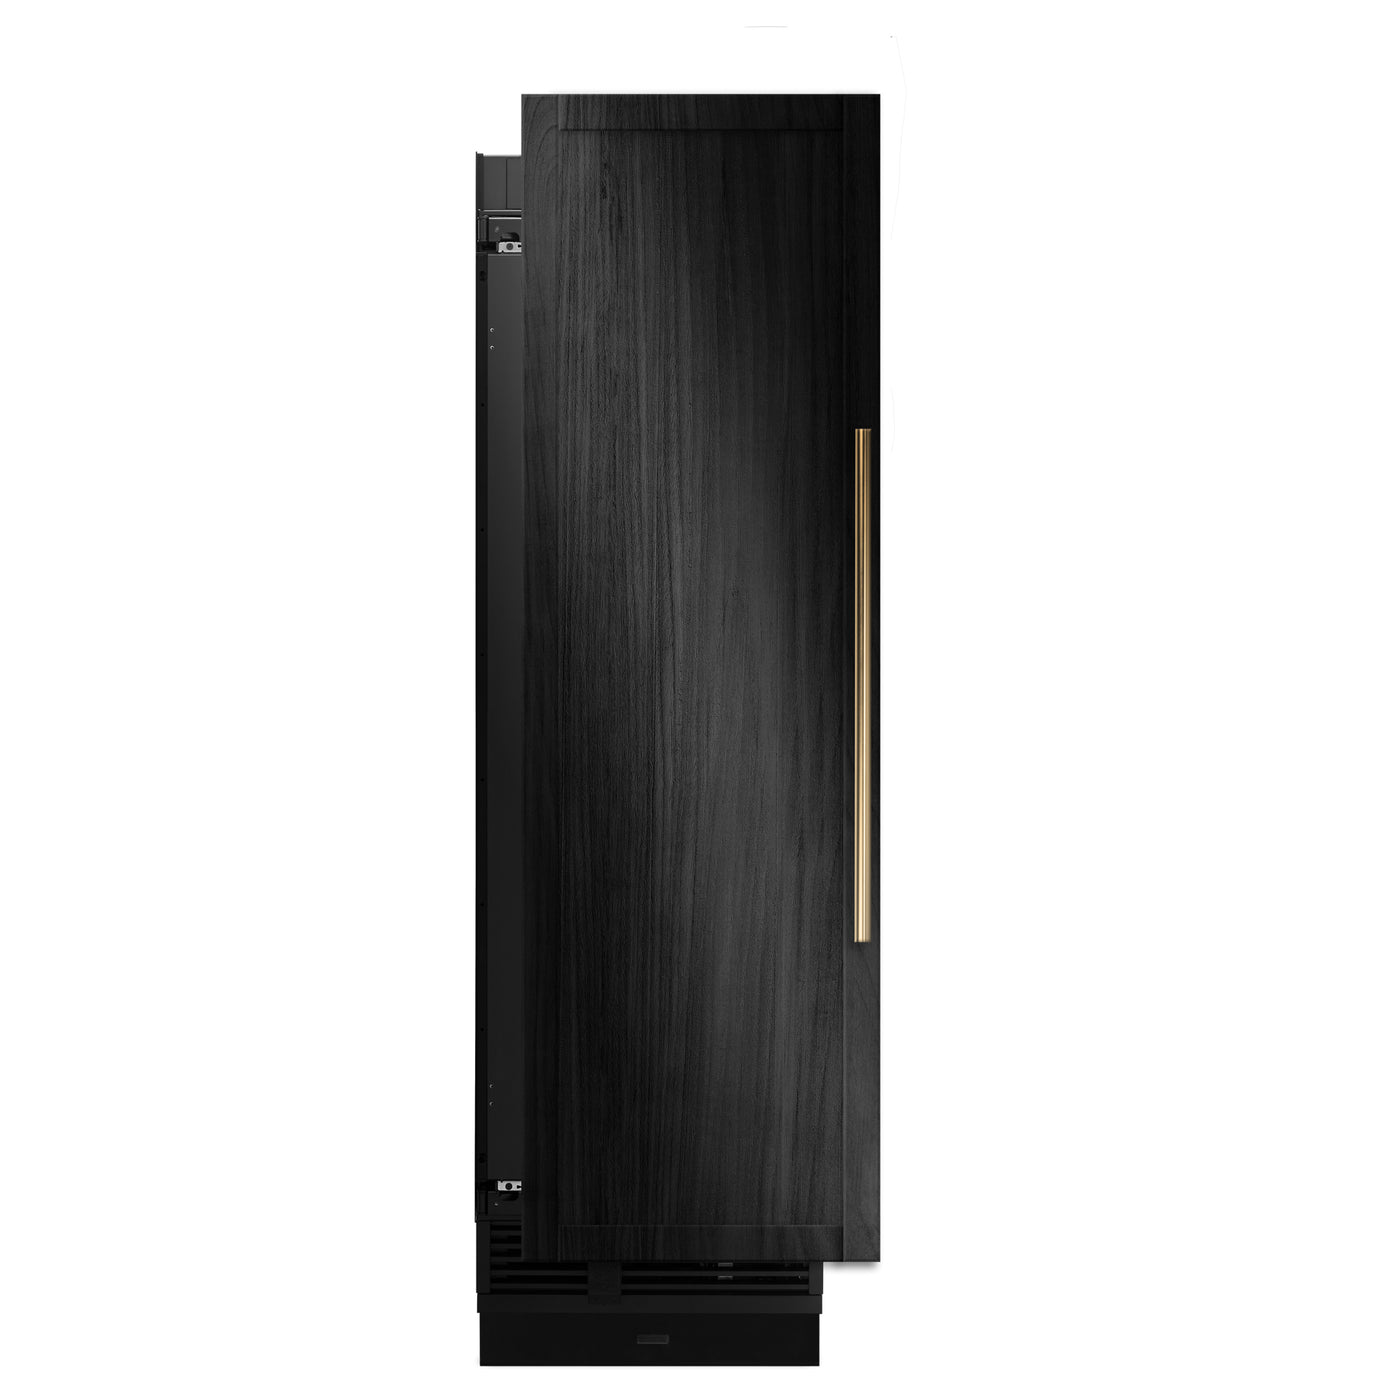 24" Panel-Ready Built-In Column Refrigerator